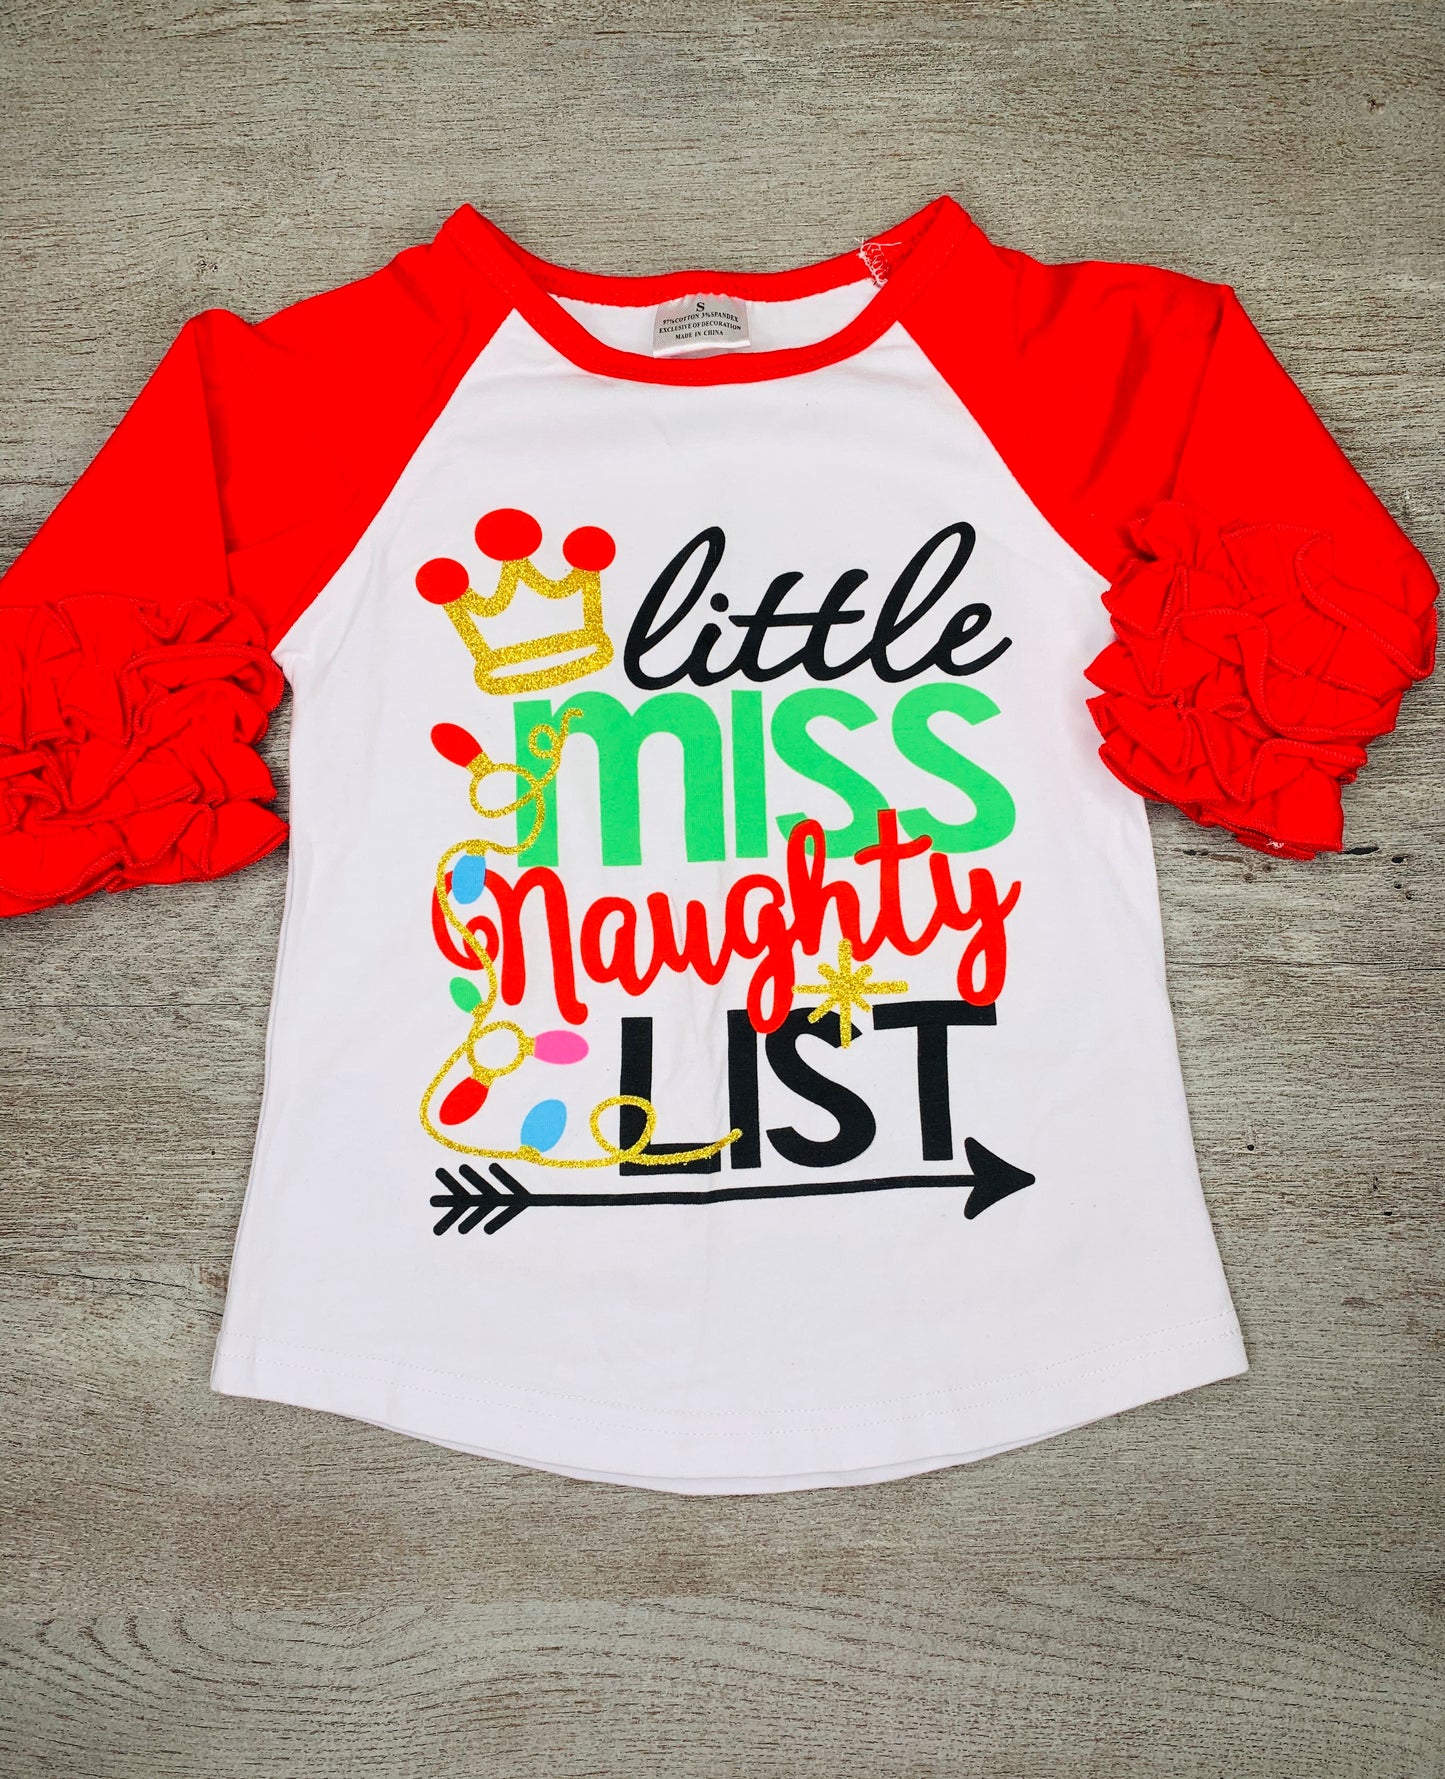 Naughty List Shirt